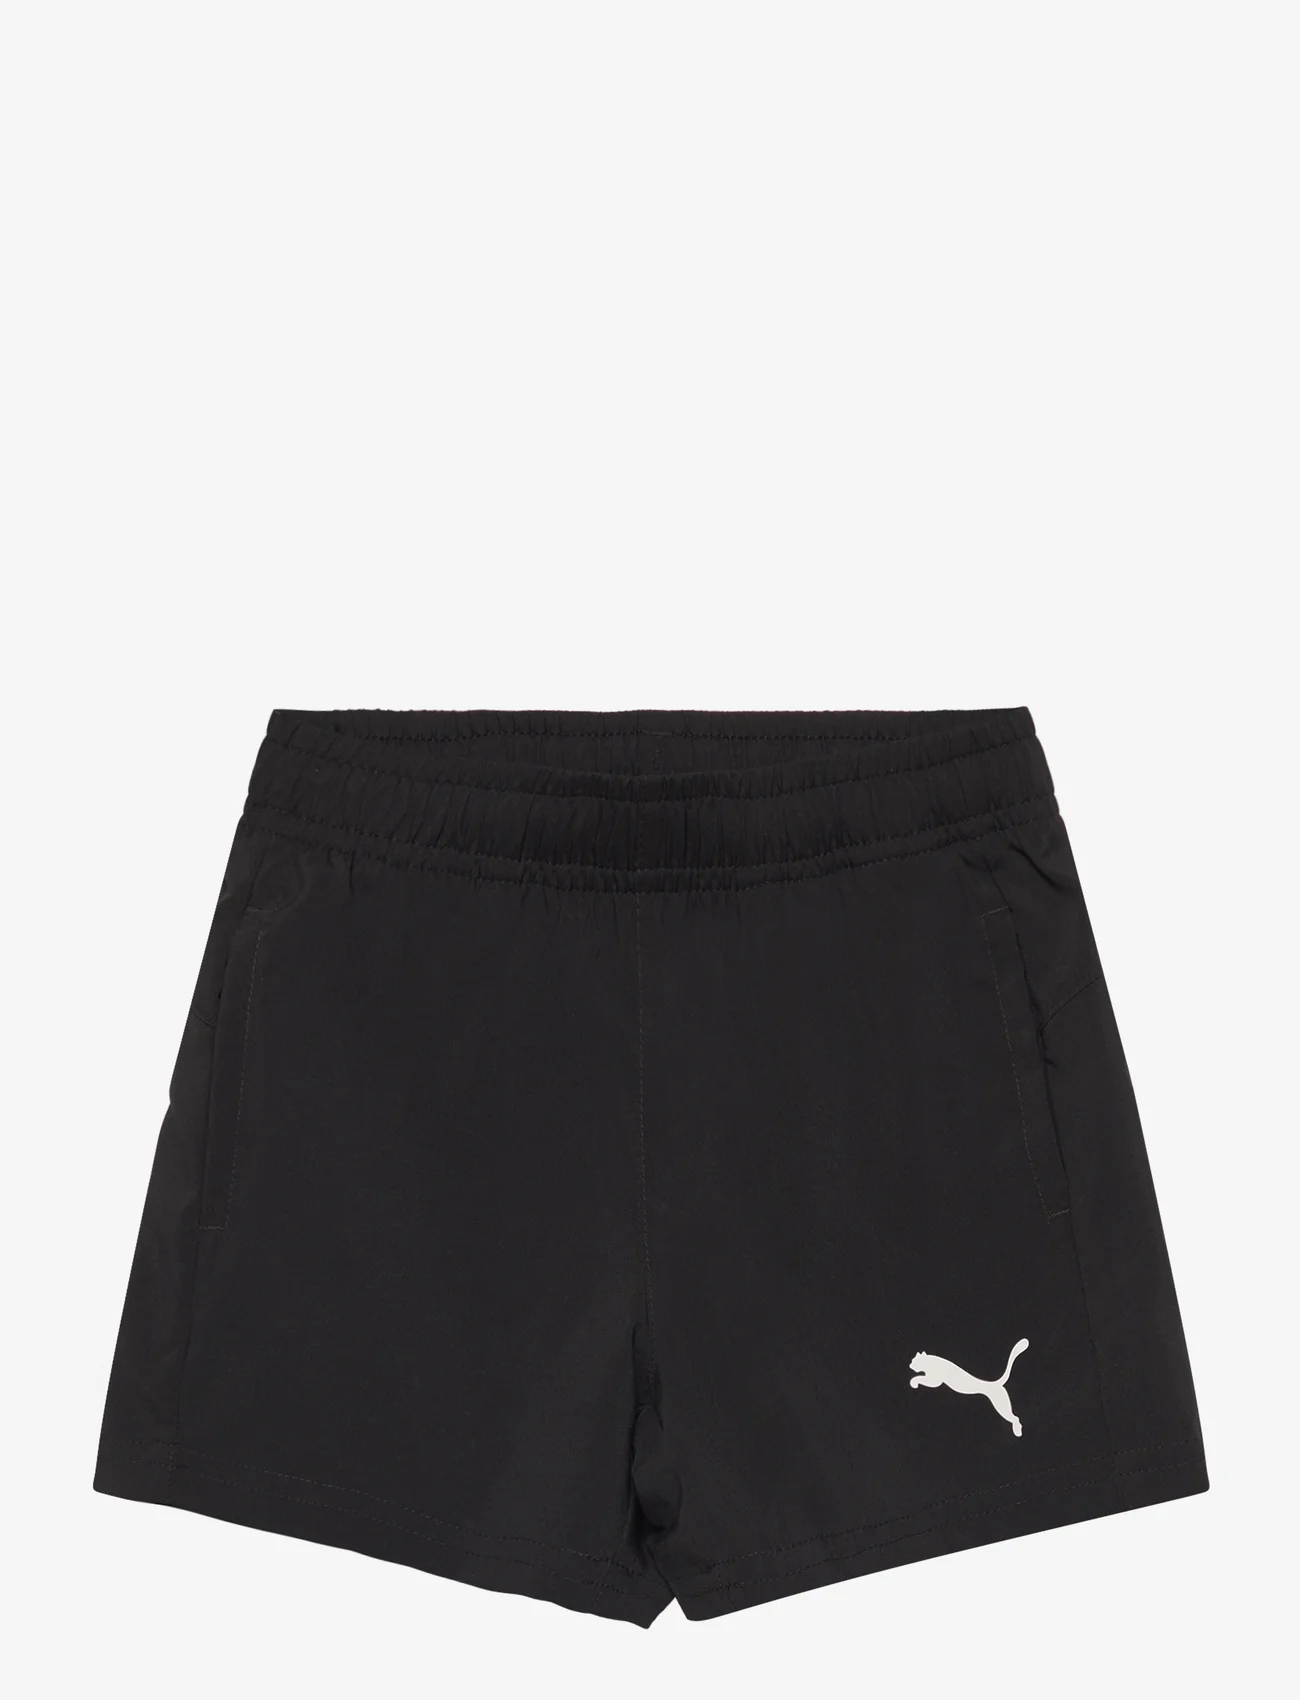 PUMA - ACTIVE Woven Shorts B - sportimise püksid - puma black - 0